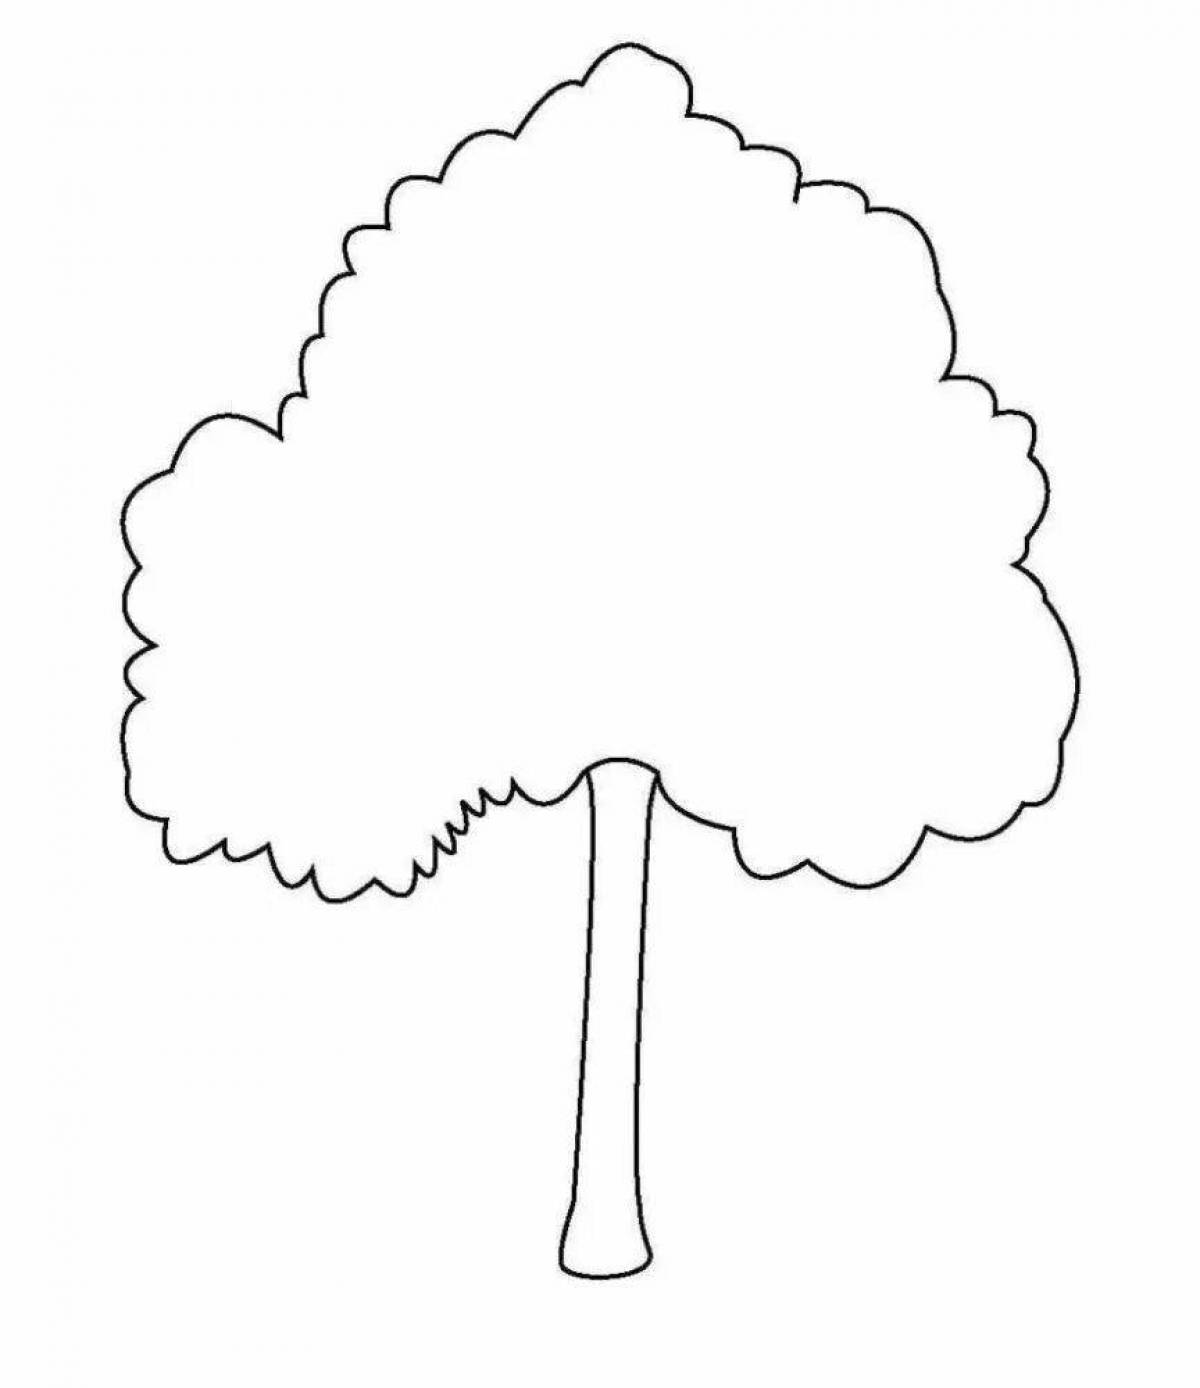 Tree template #1